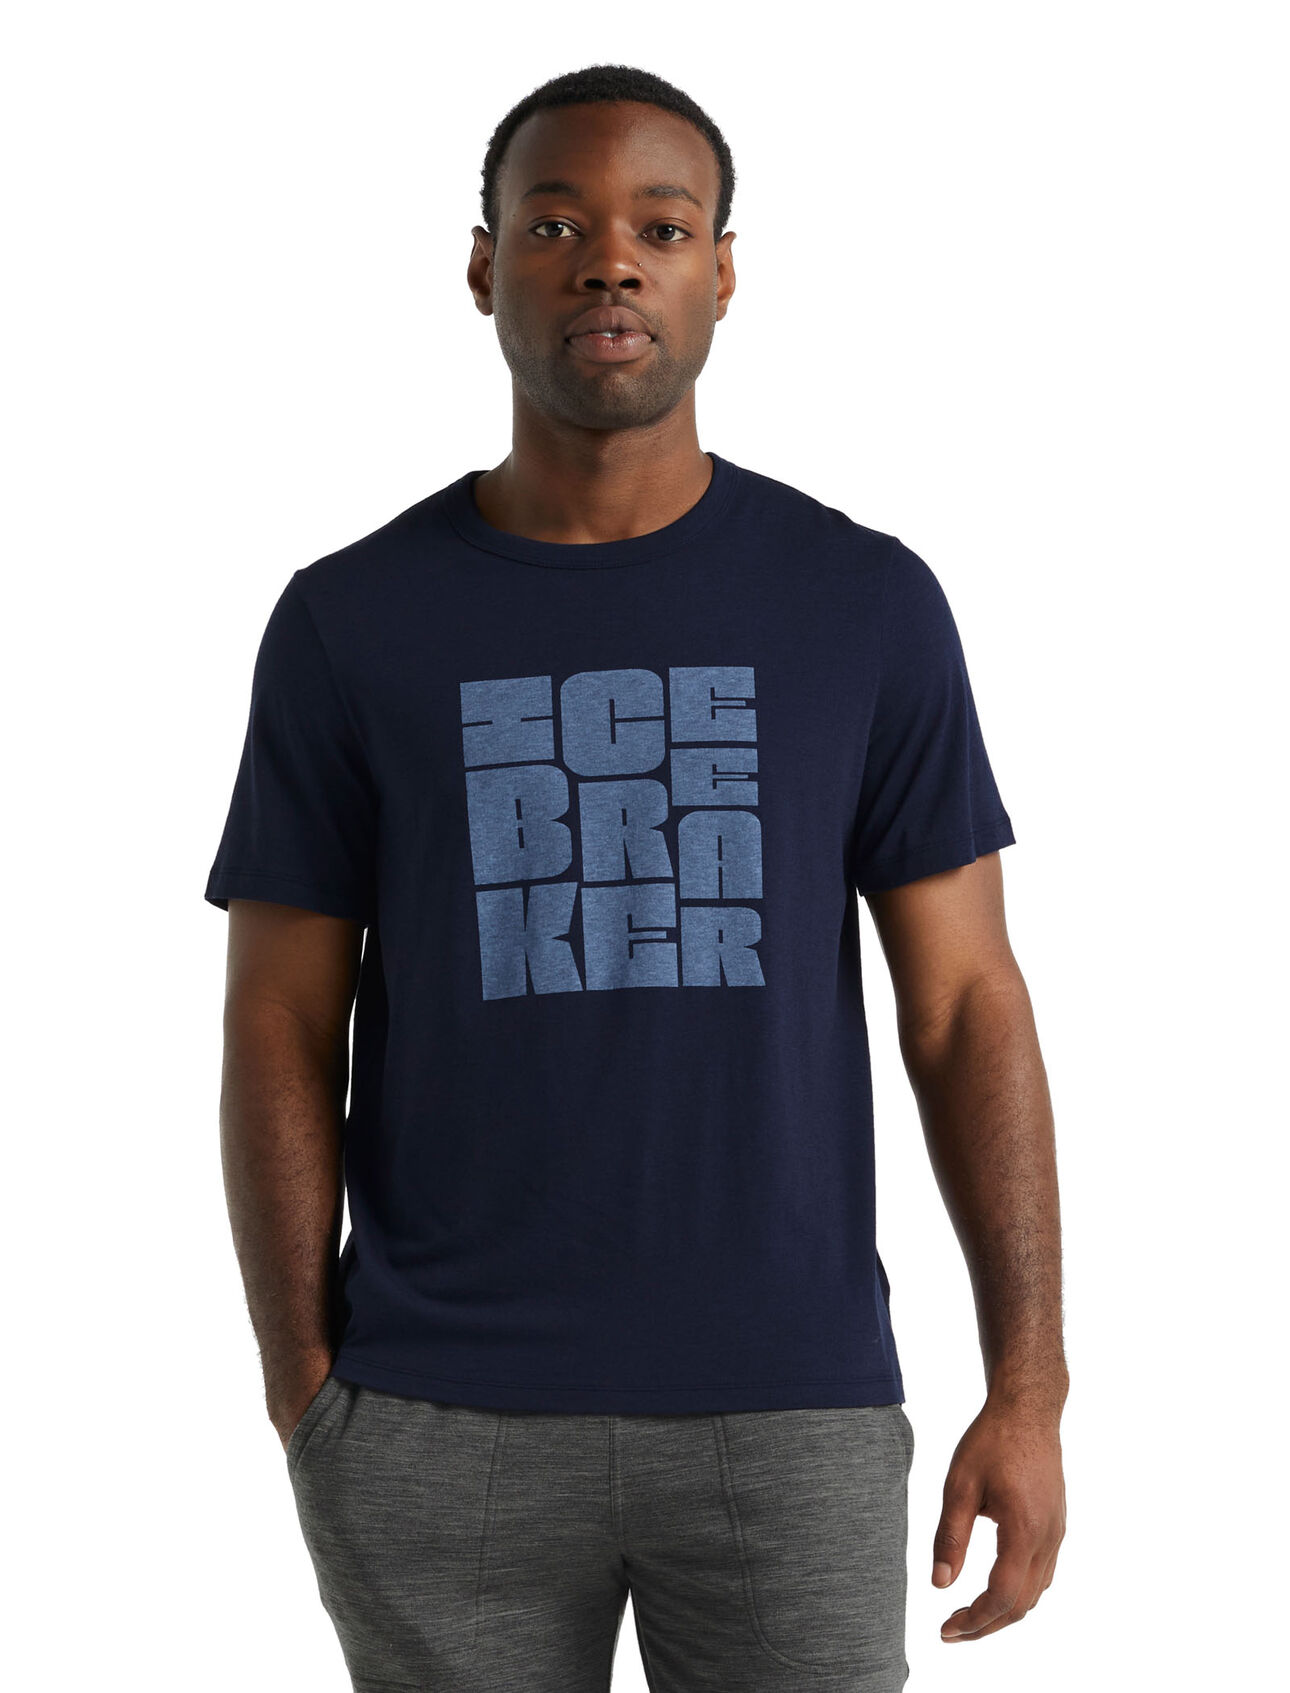 T-shirt Central en mérinos, motif typographique